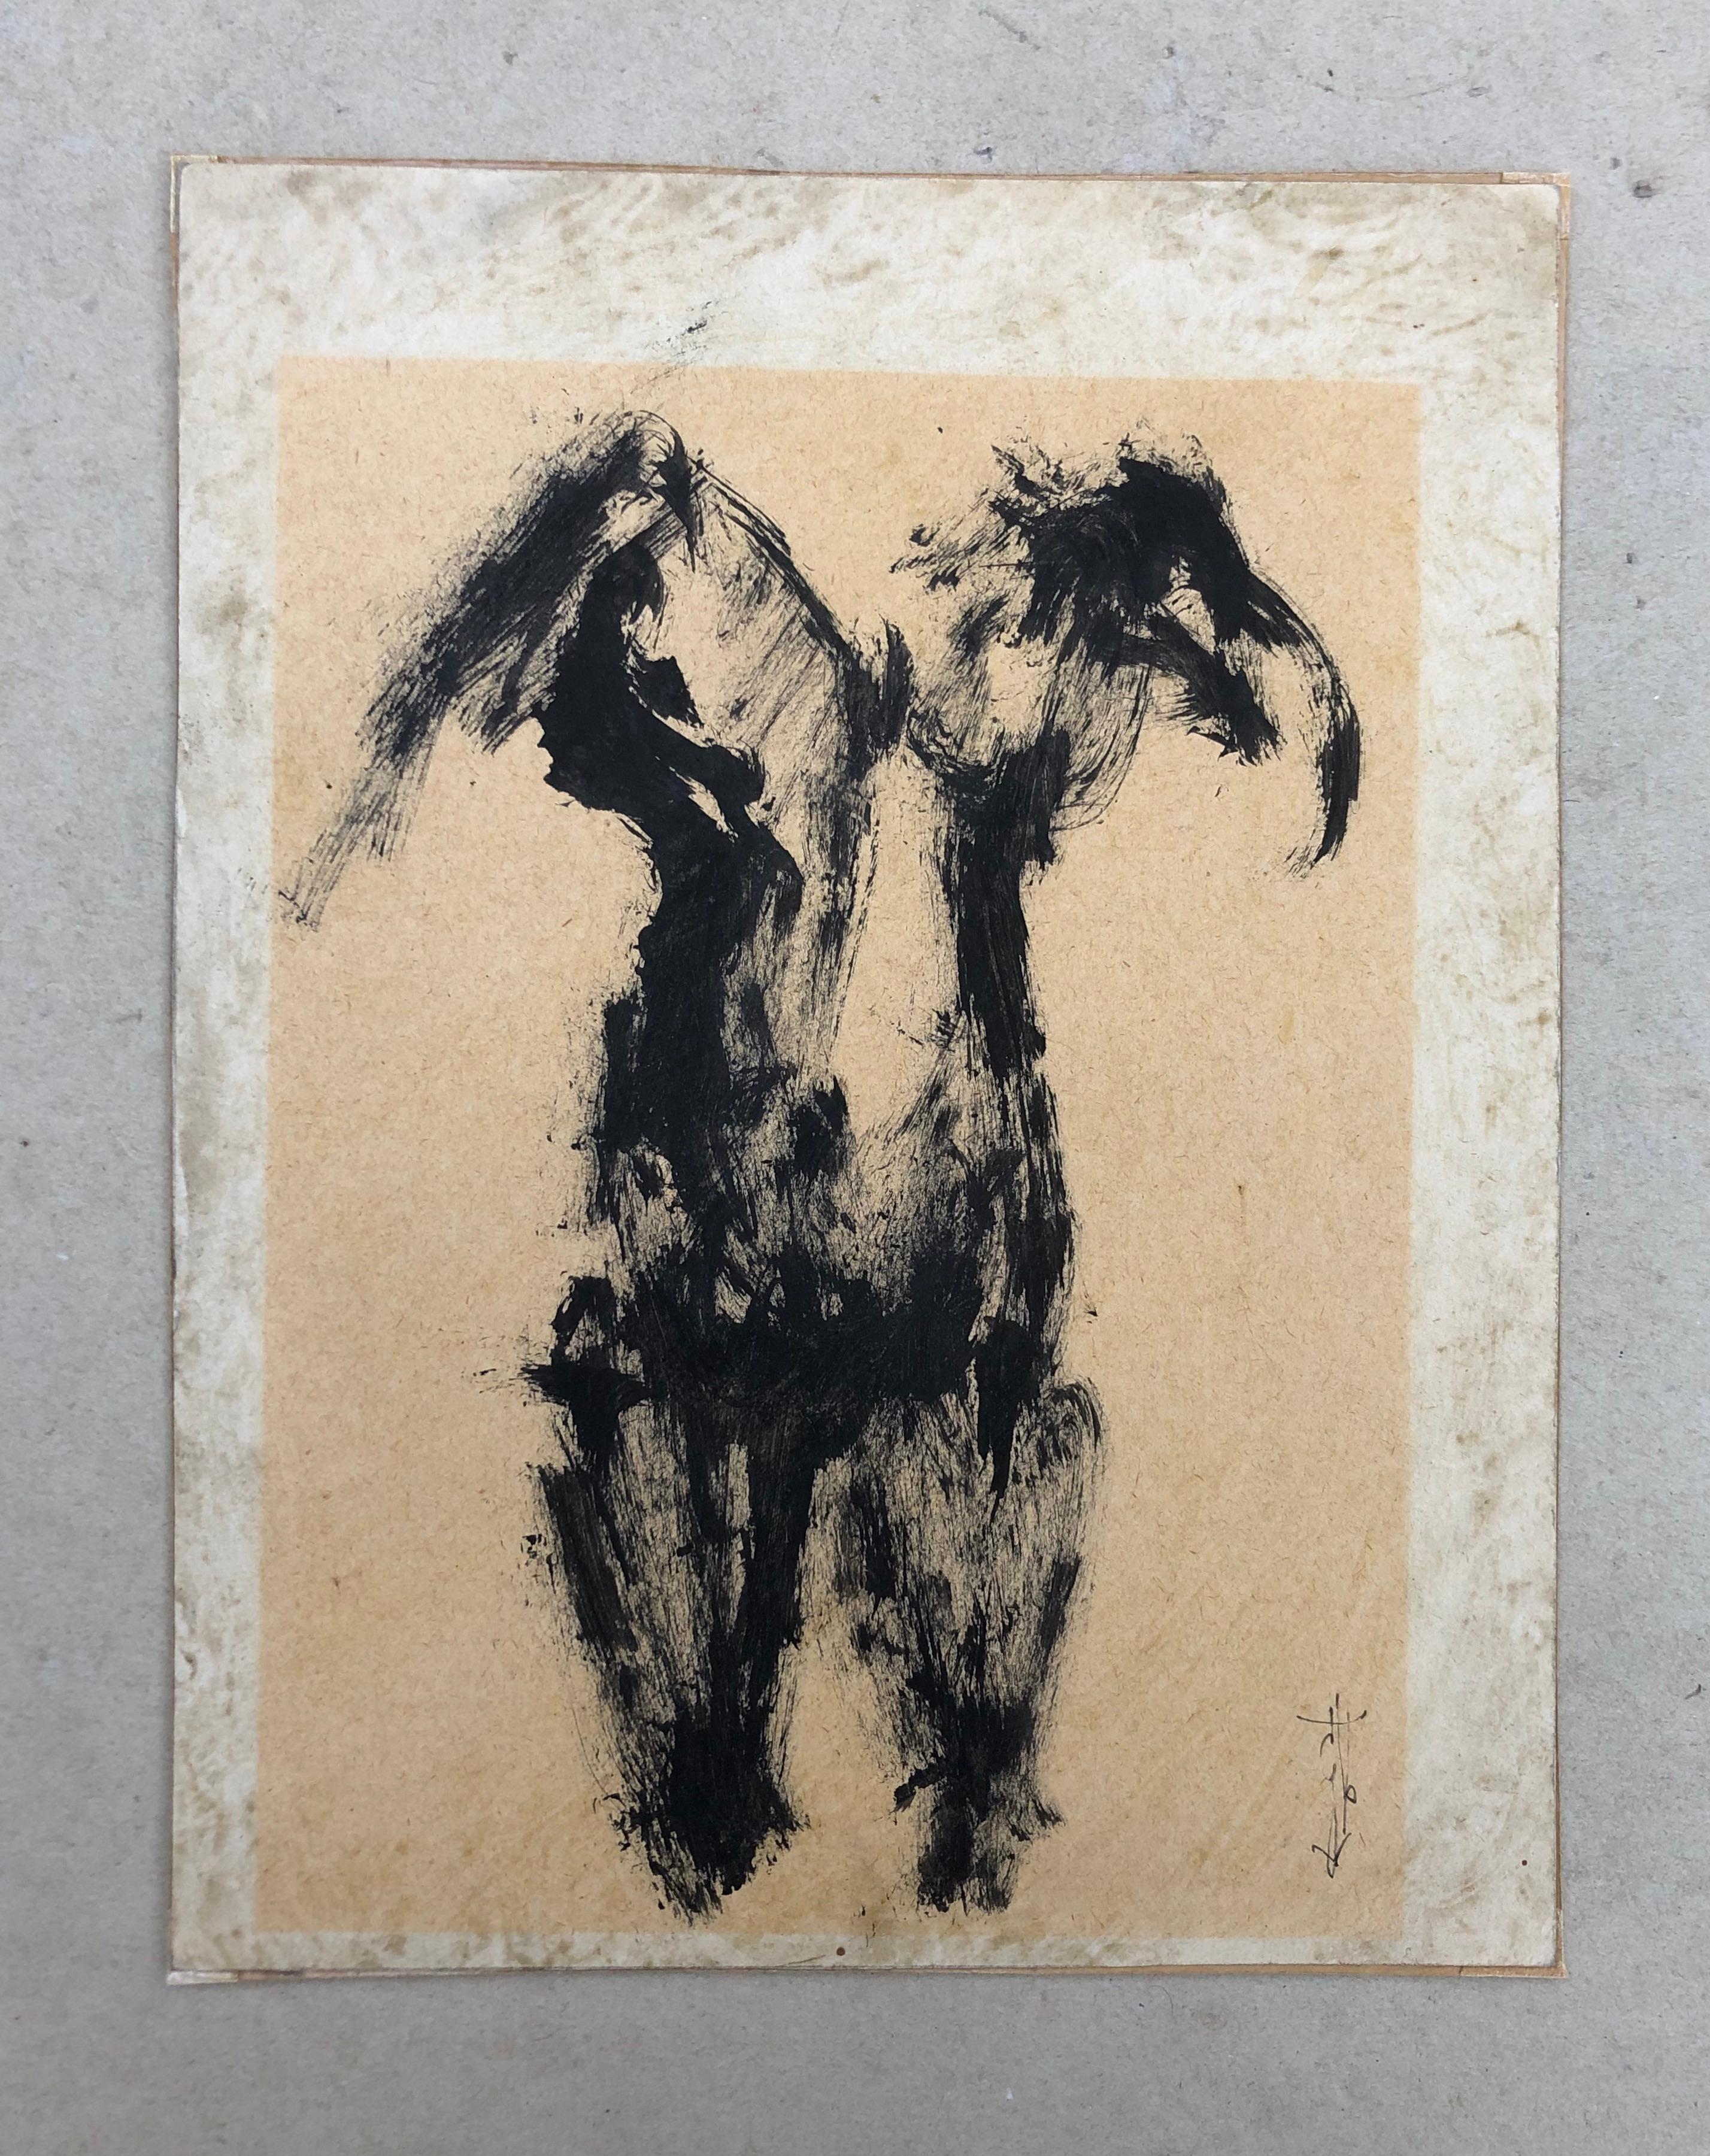 Female nude.
India ink.
Monogram to identify.
Sunstroke.
26 x 20 cm